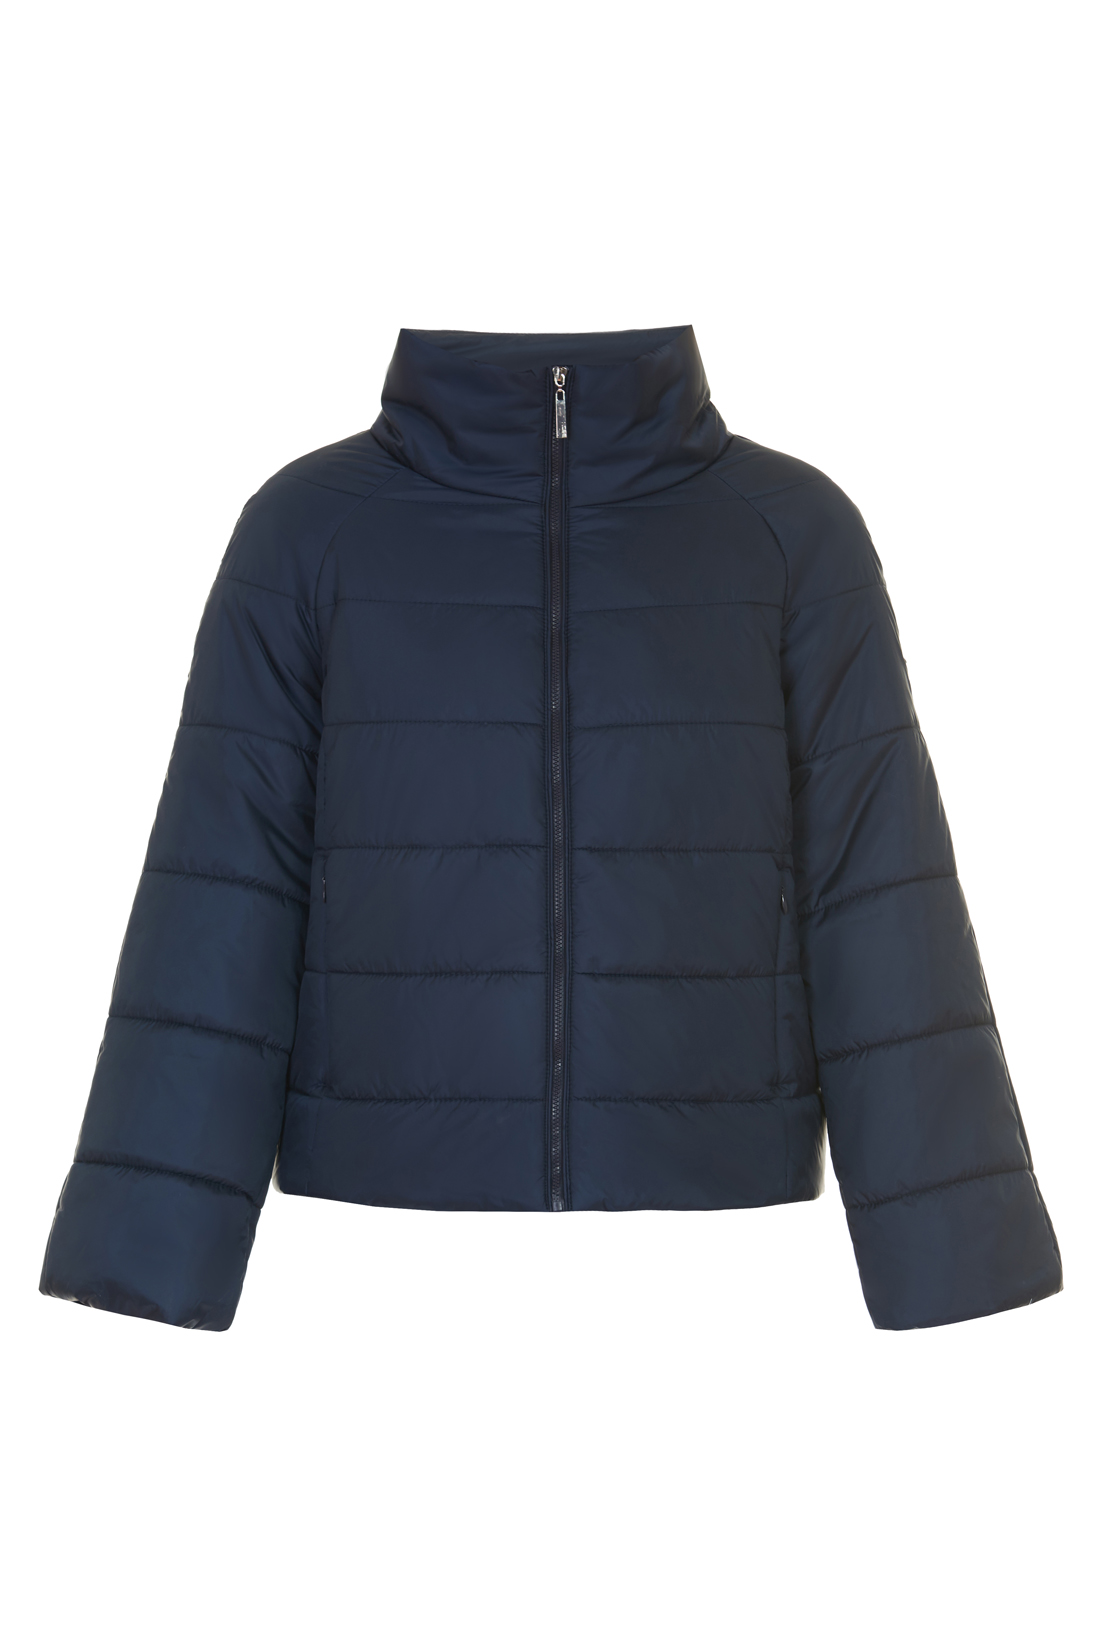 Куртка с рукавами-реглан (арт. baon B038045), размер XS, цвет синий Куртка с рукавами-реглан (арт. baon B038045) - фото 3